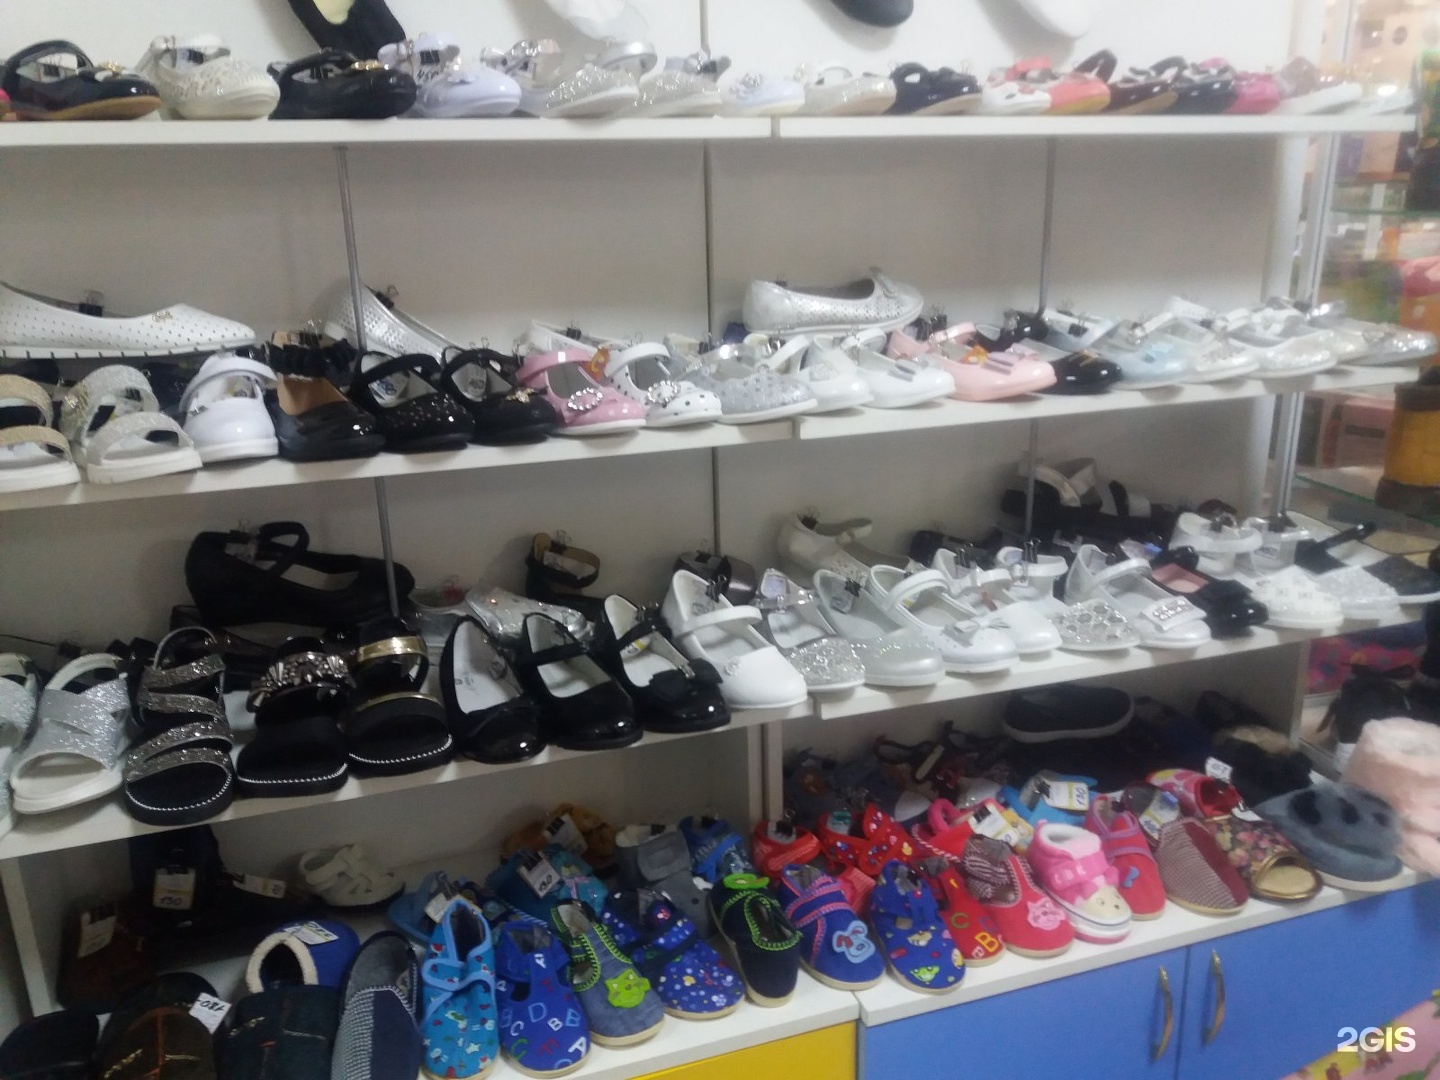 Обувь оренбург сайт. Магазин обуви Оренбург. Сеть магазинов обуви в Оренбурге. Карагандинская 92 Оренбург. Сеть магазинов обуви в Оренбурге возле рынка центральной.